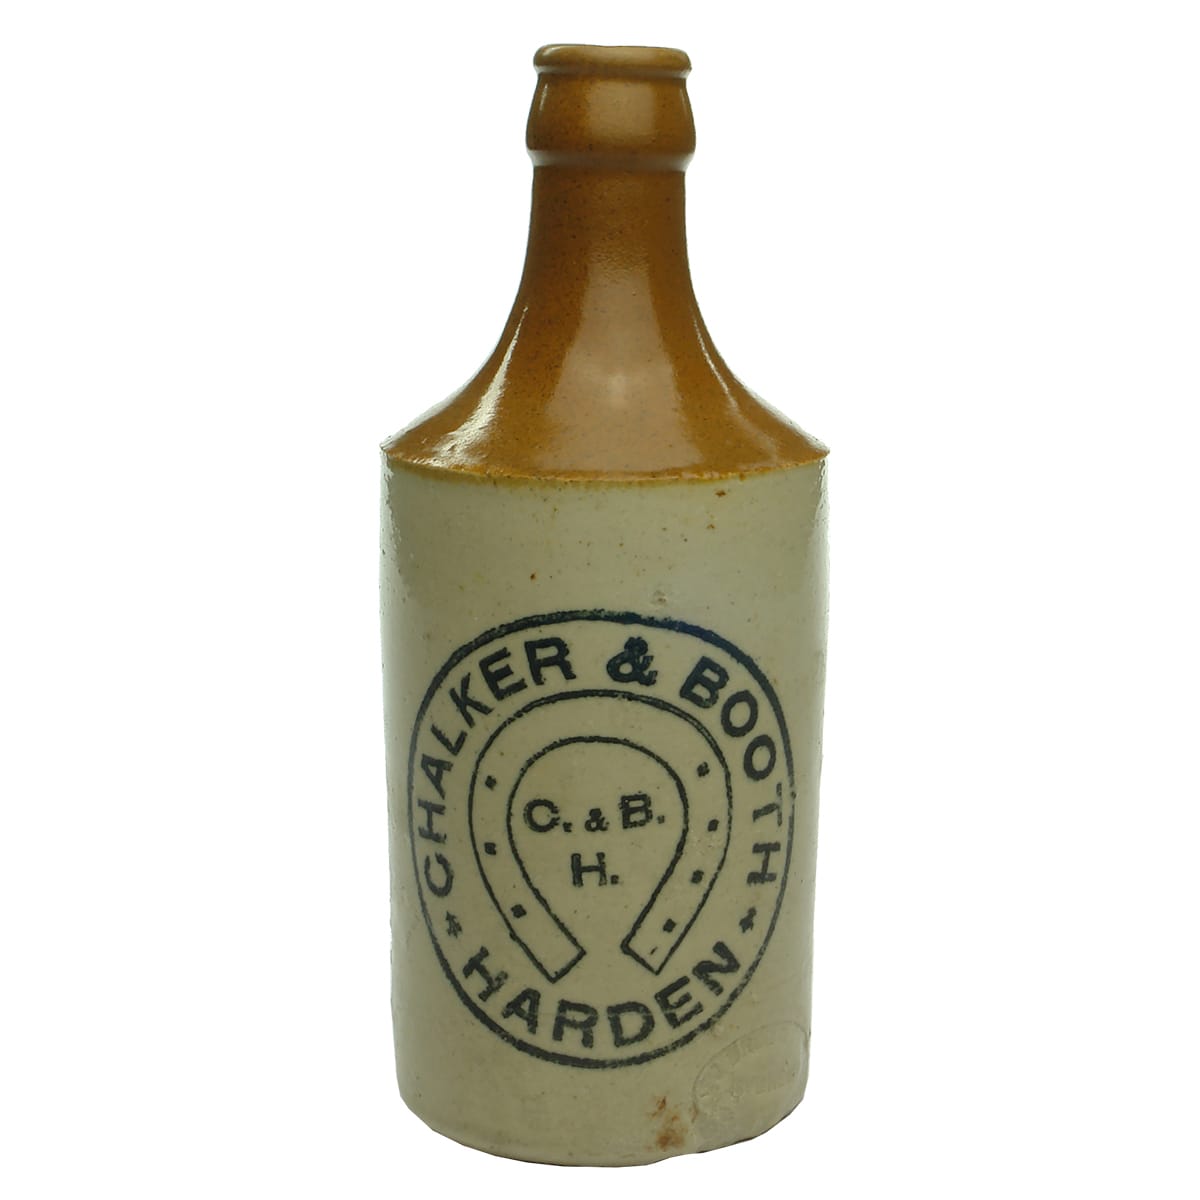 Ginger Beer. Chalker & Booth, Harden.  Crown seal.  Dump.  Tan top.